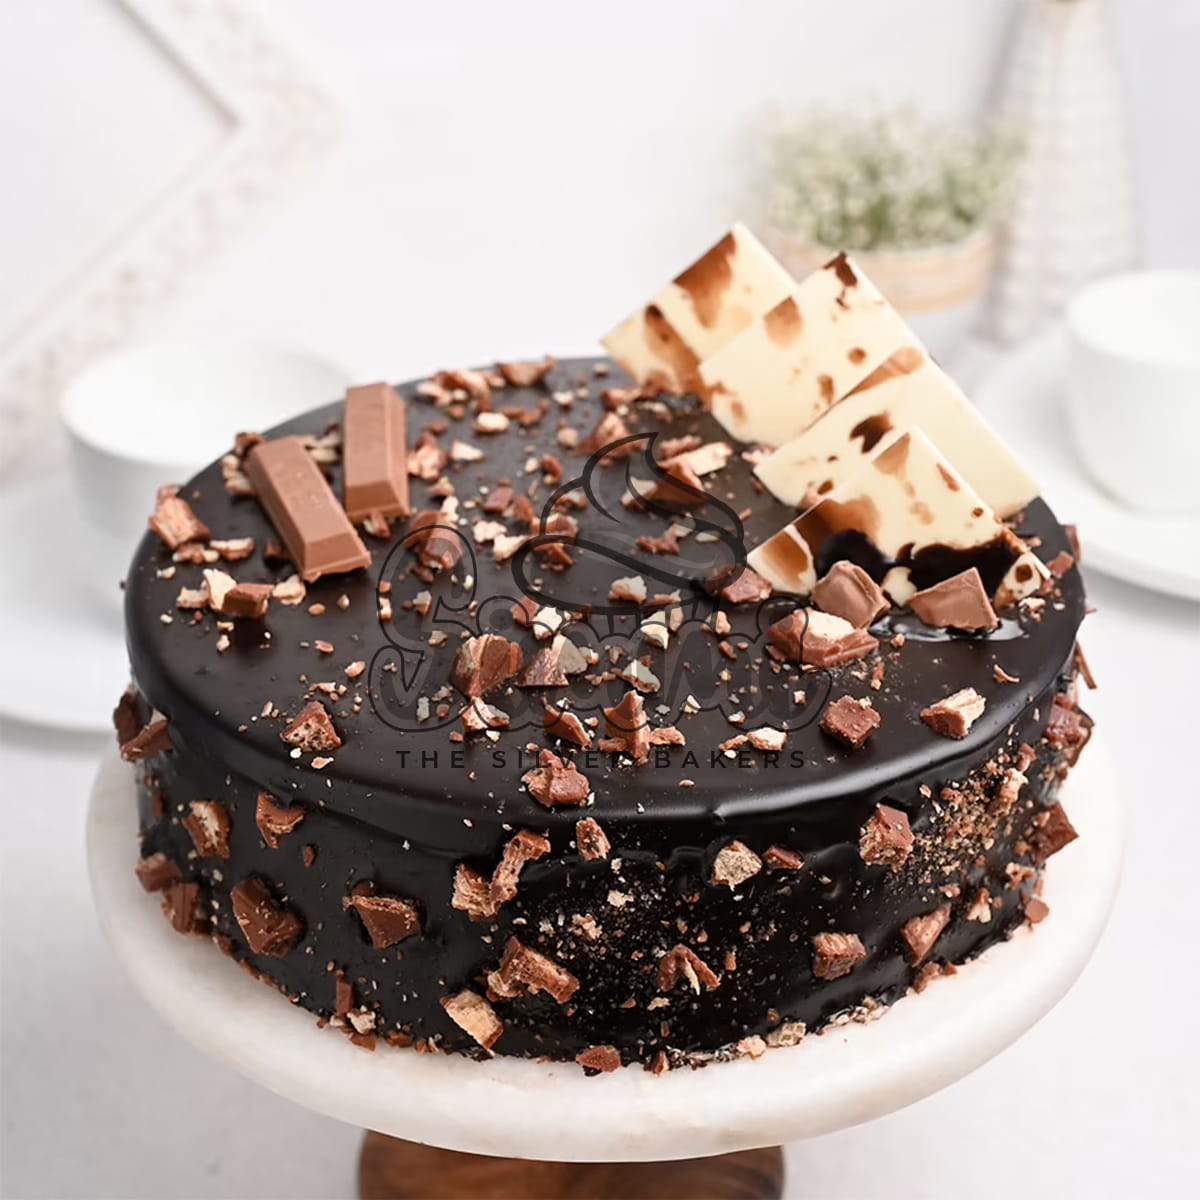 Homemade] Chocolate KitKat Cake : r/food